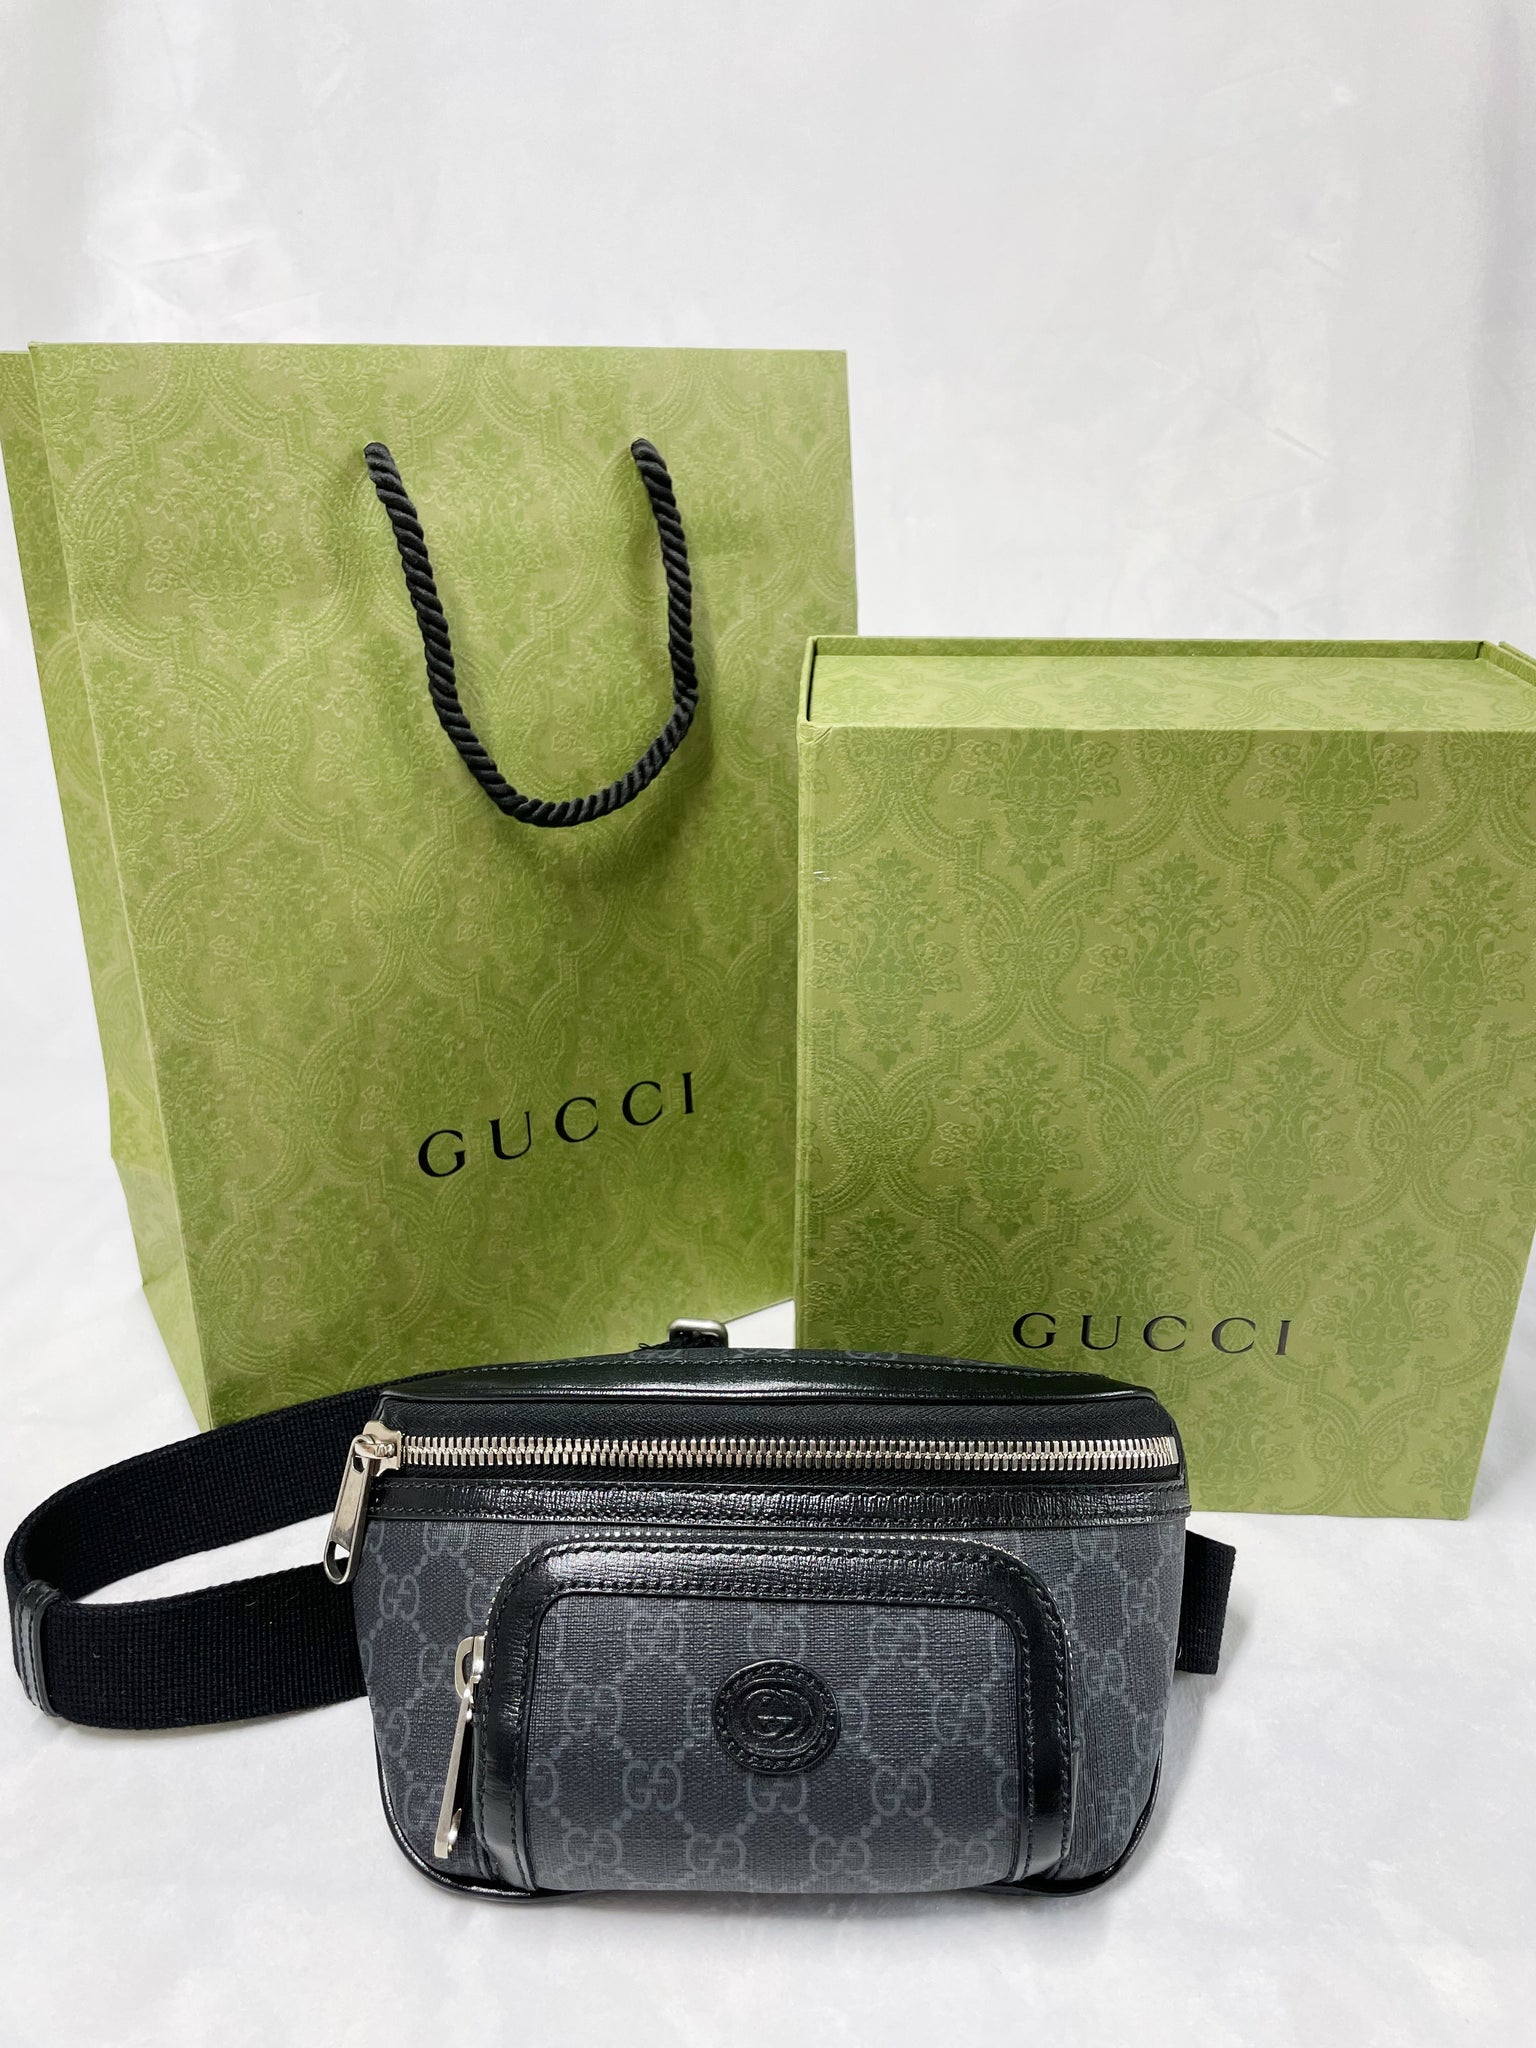 Gucci GG Supreme Belt Bag (unisex) *brand new*